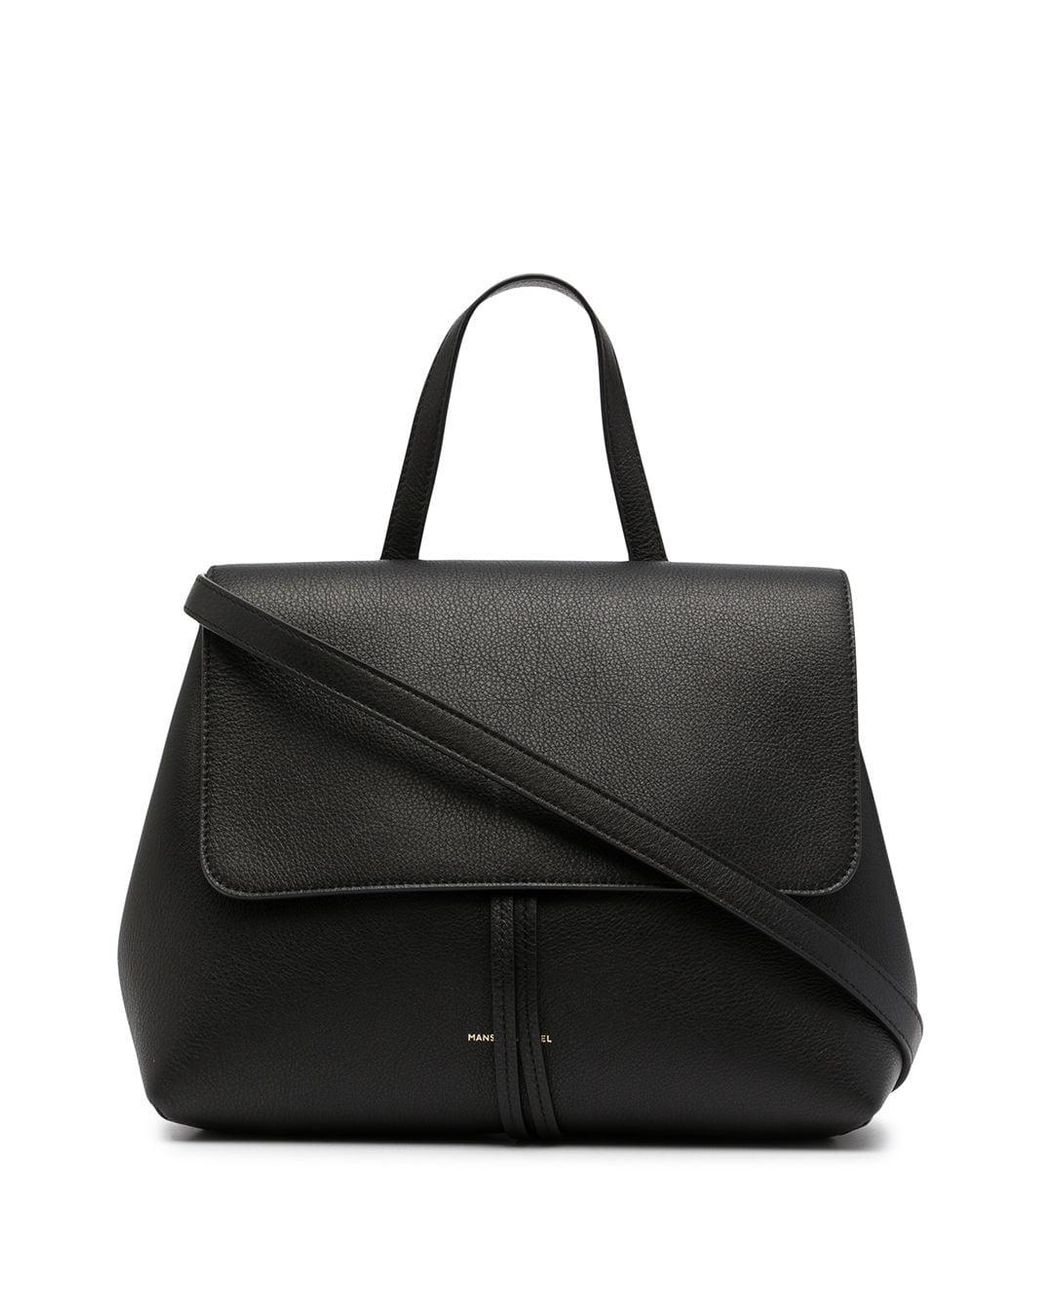 Mansur Gavriel Leather Soft Lady Tote Bag in Black - Lyst